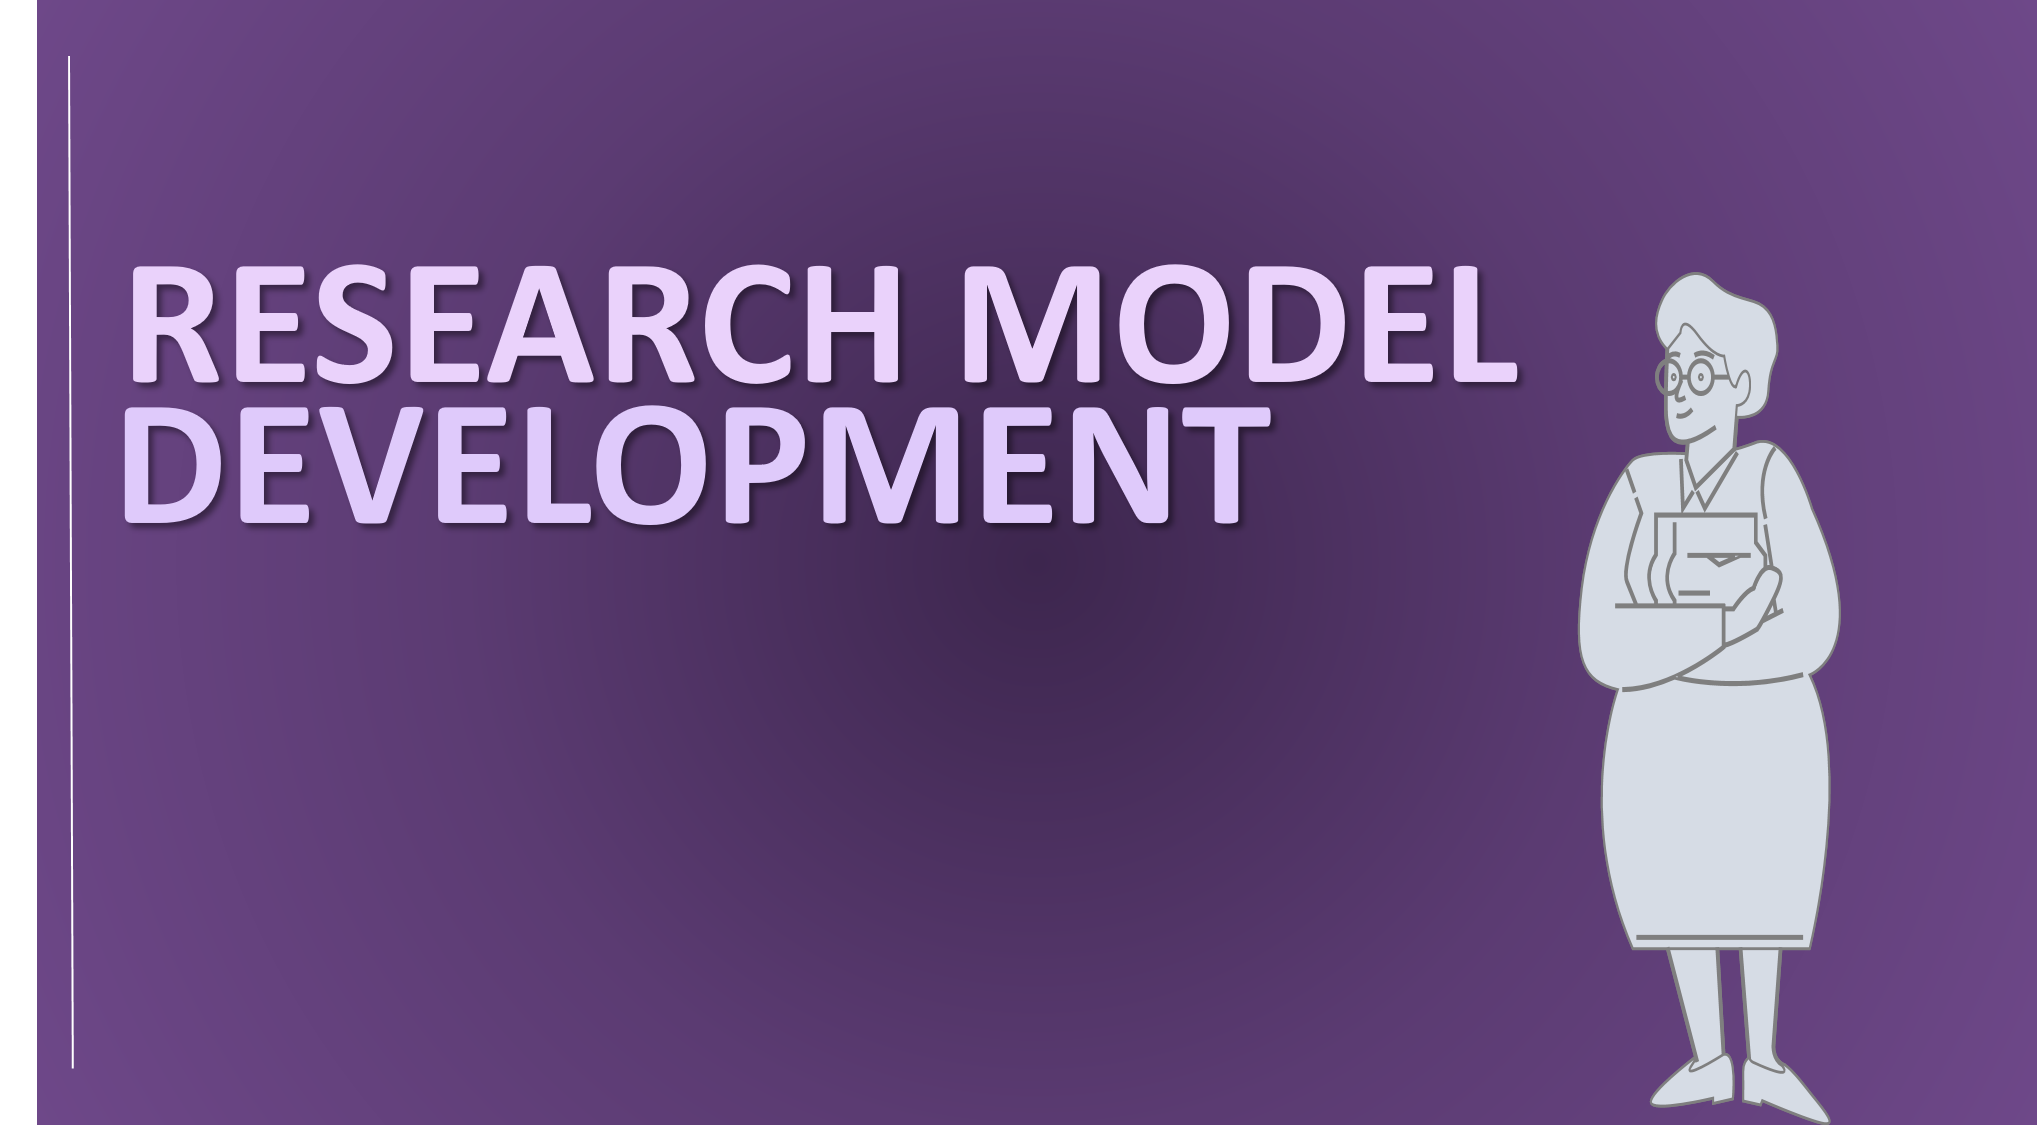 8 tips on Research Model Development